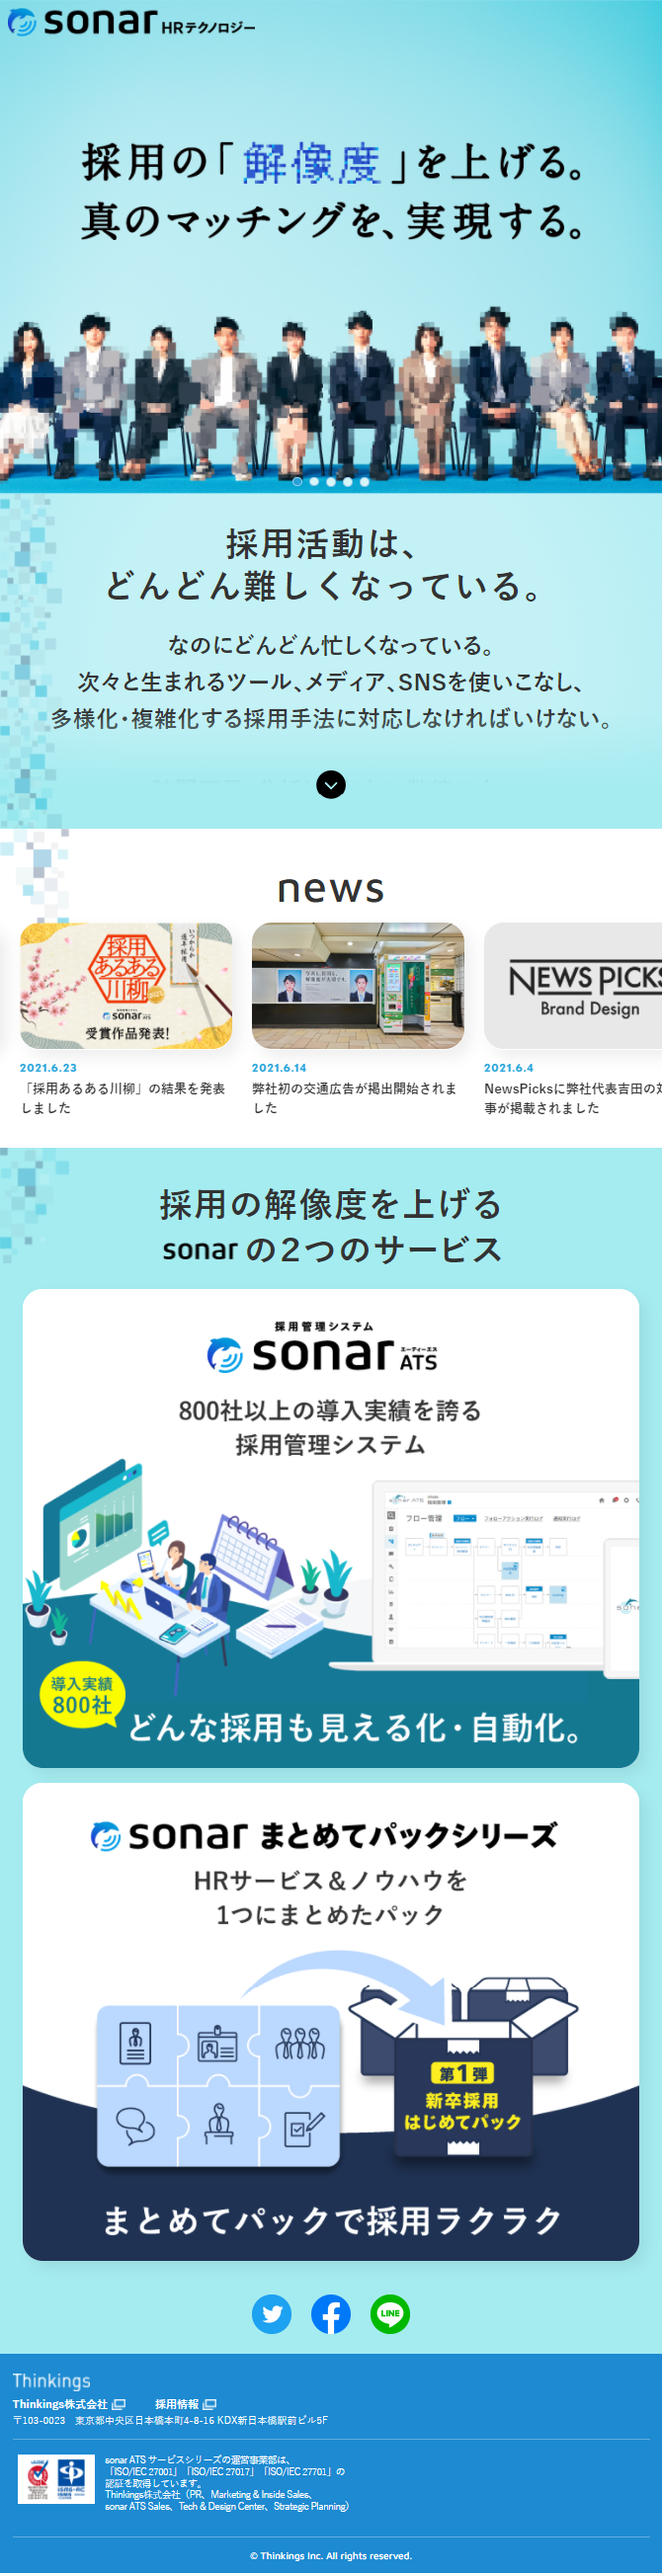 sonar HRテクノロジー_sp_1